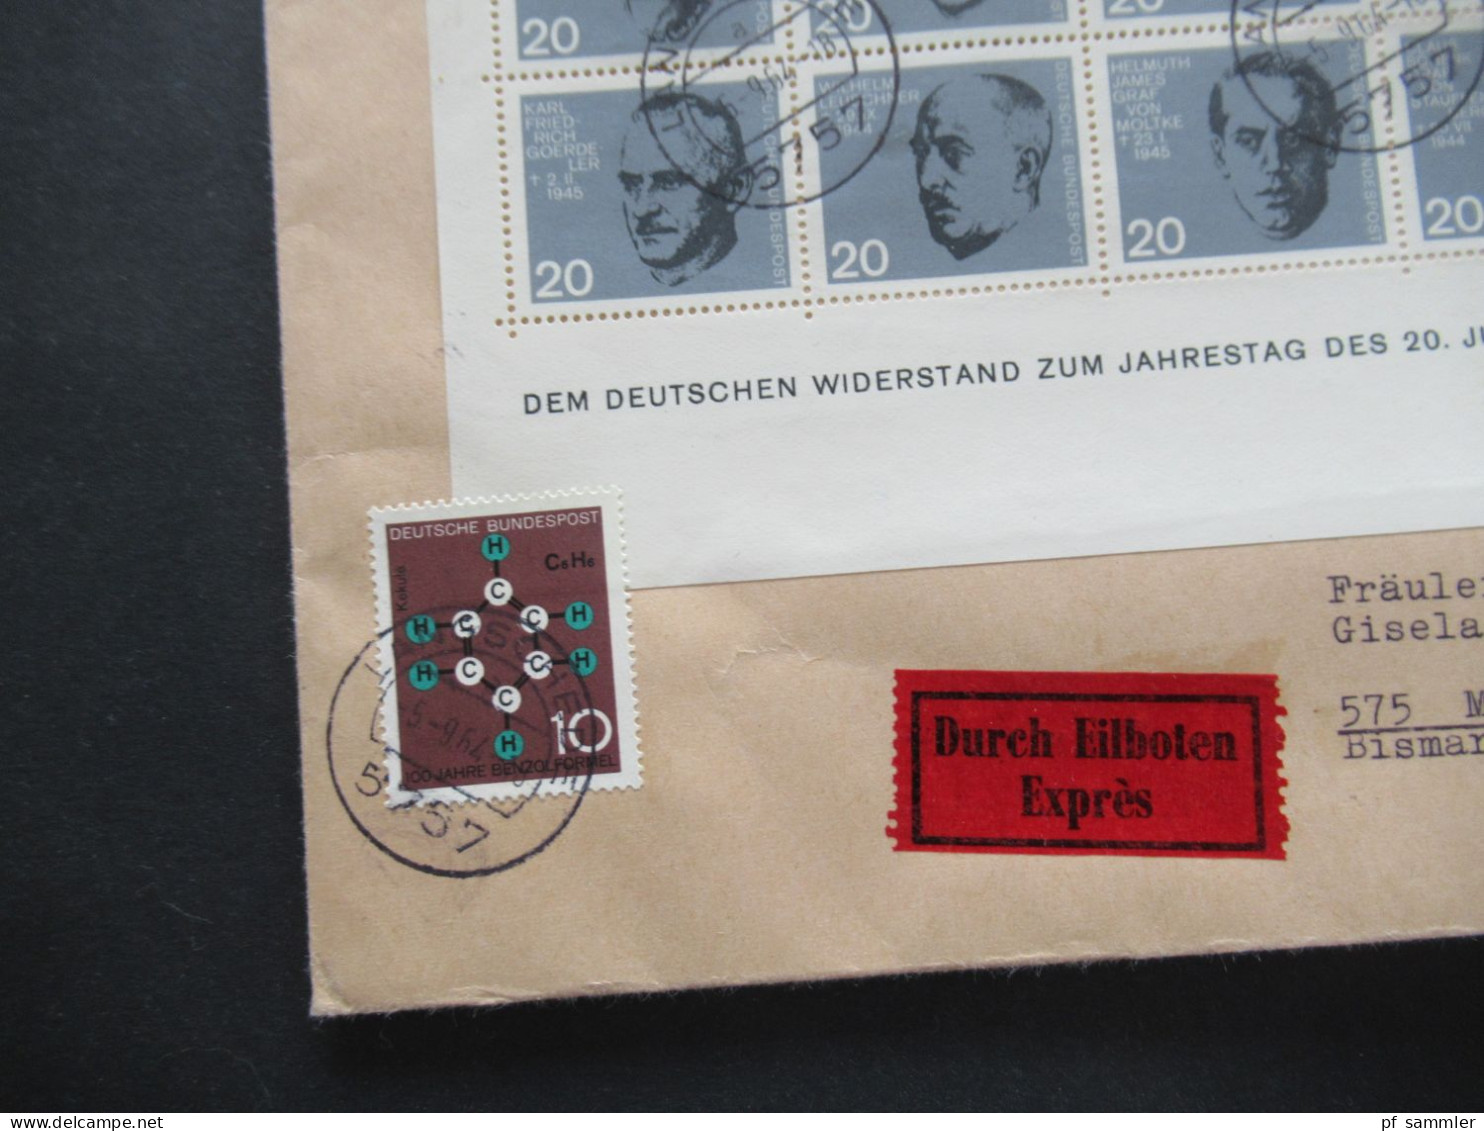 BRD 1964 Block 3 Widerstandskämpfer MiF Einschreiben Durch Eilboten Express Beleg Langscheide (Ruhr) - Menden Gesendet - Covers & Documents